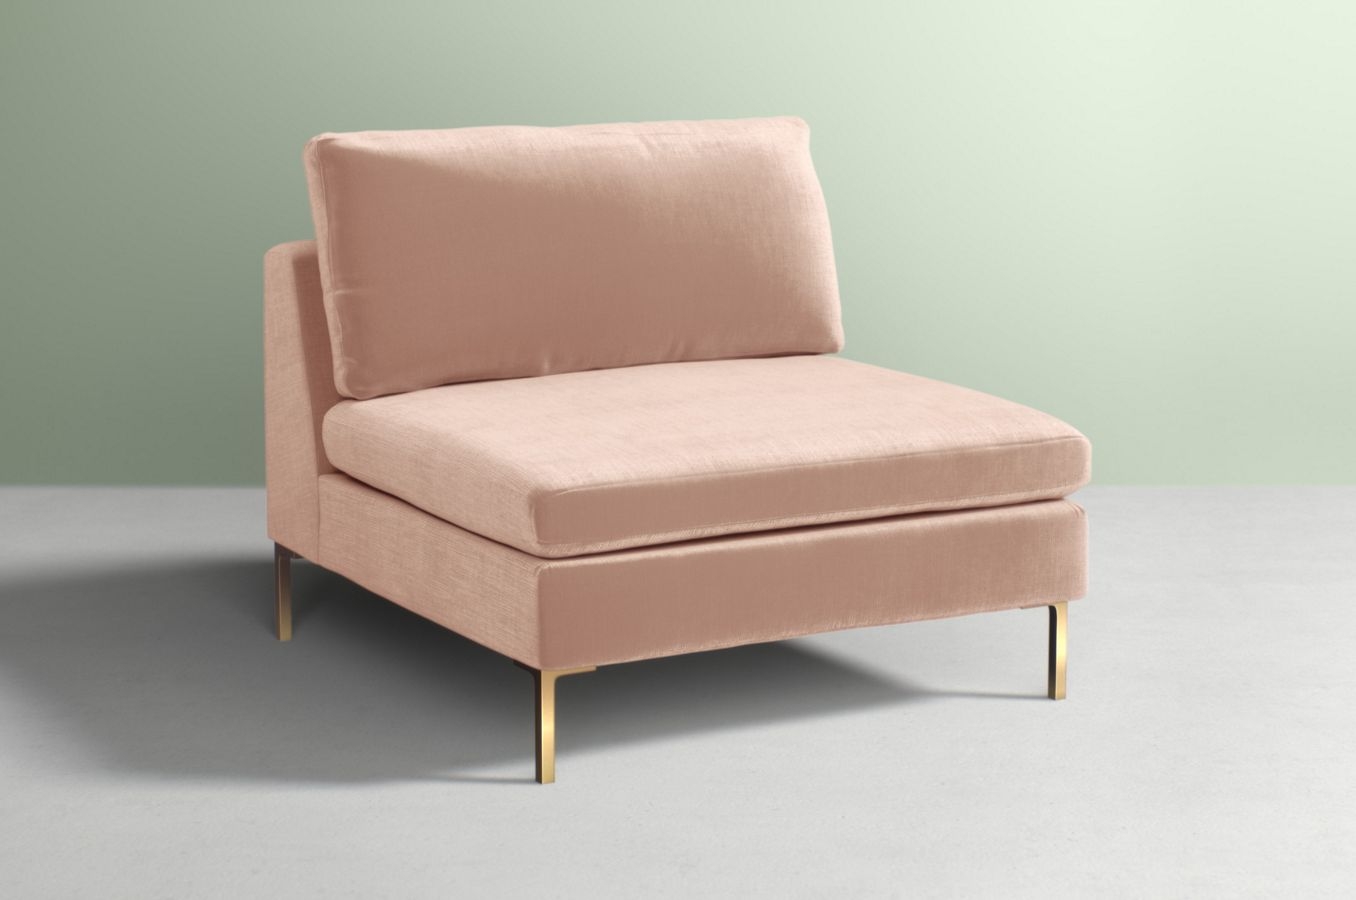 Edlyn Chair - Slub velvet in shell upholstery fabric and brass legs - Image 0